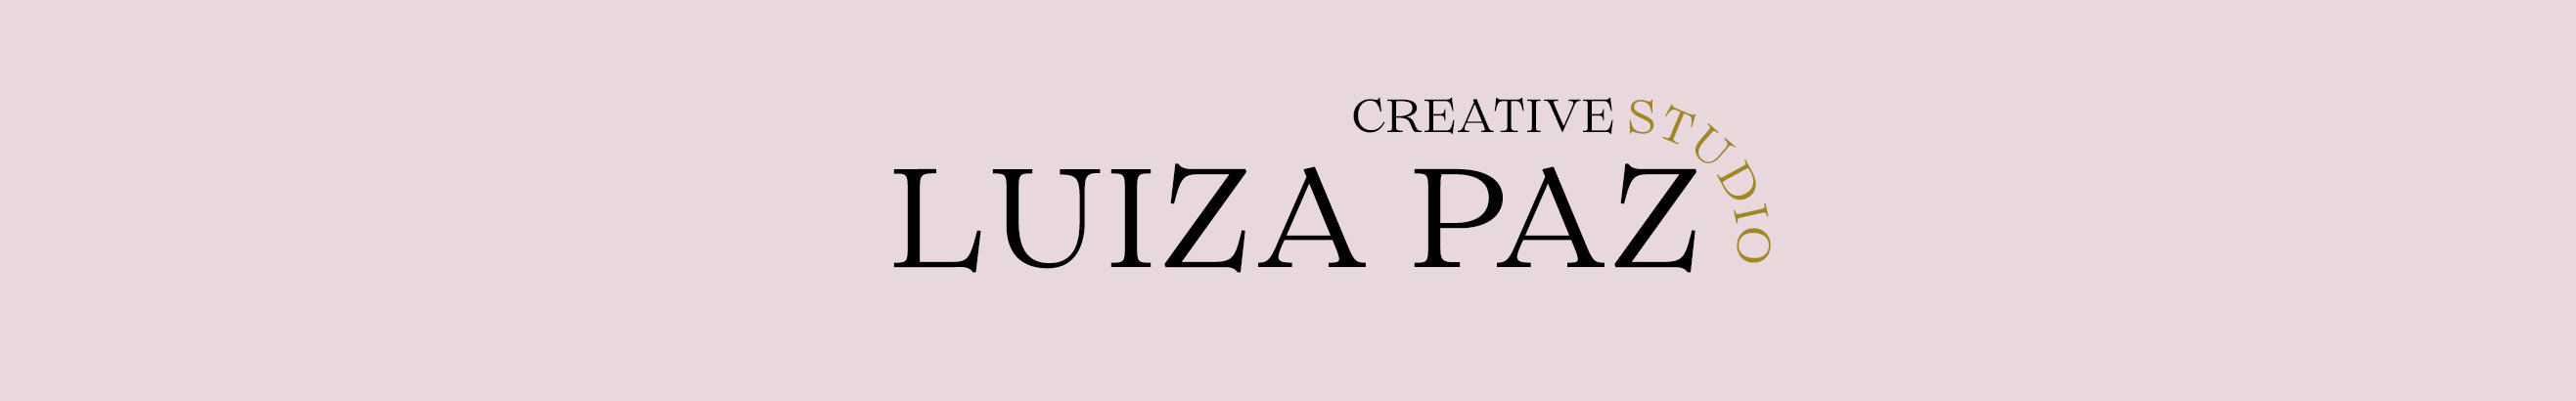 luiza paz's profile banner